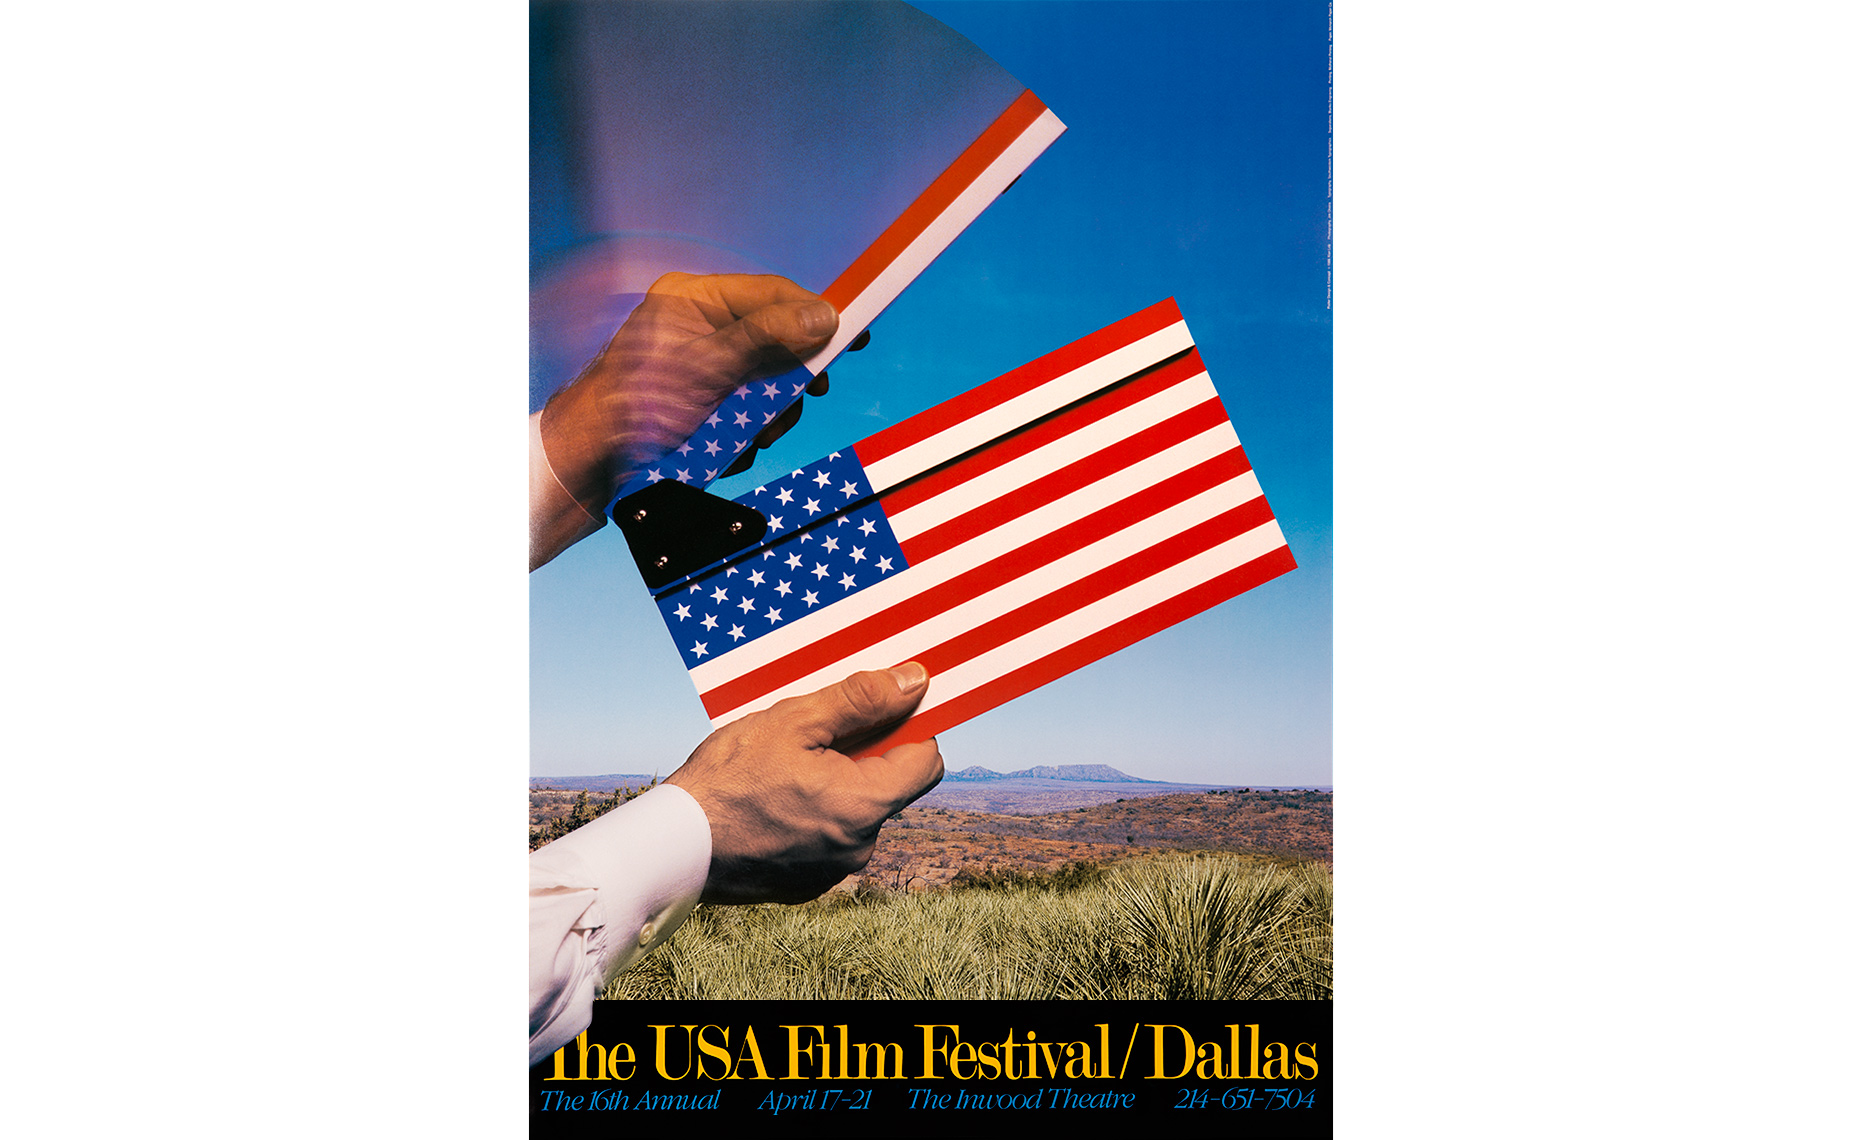 USA Film Festival Poster